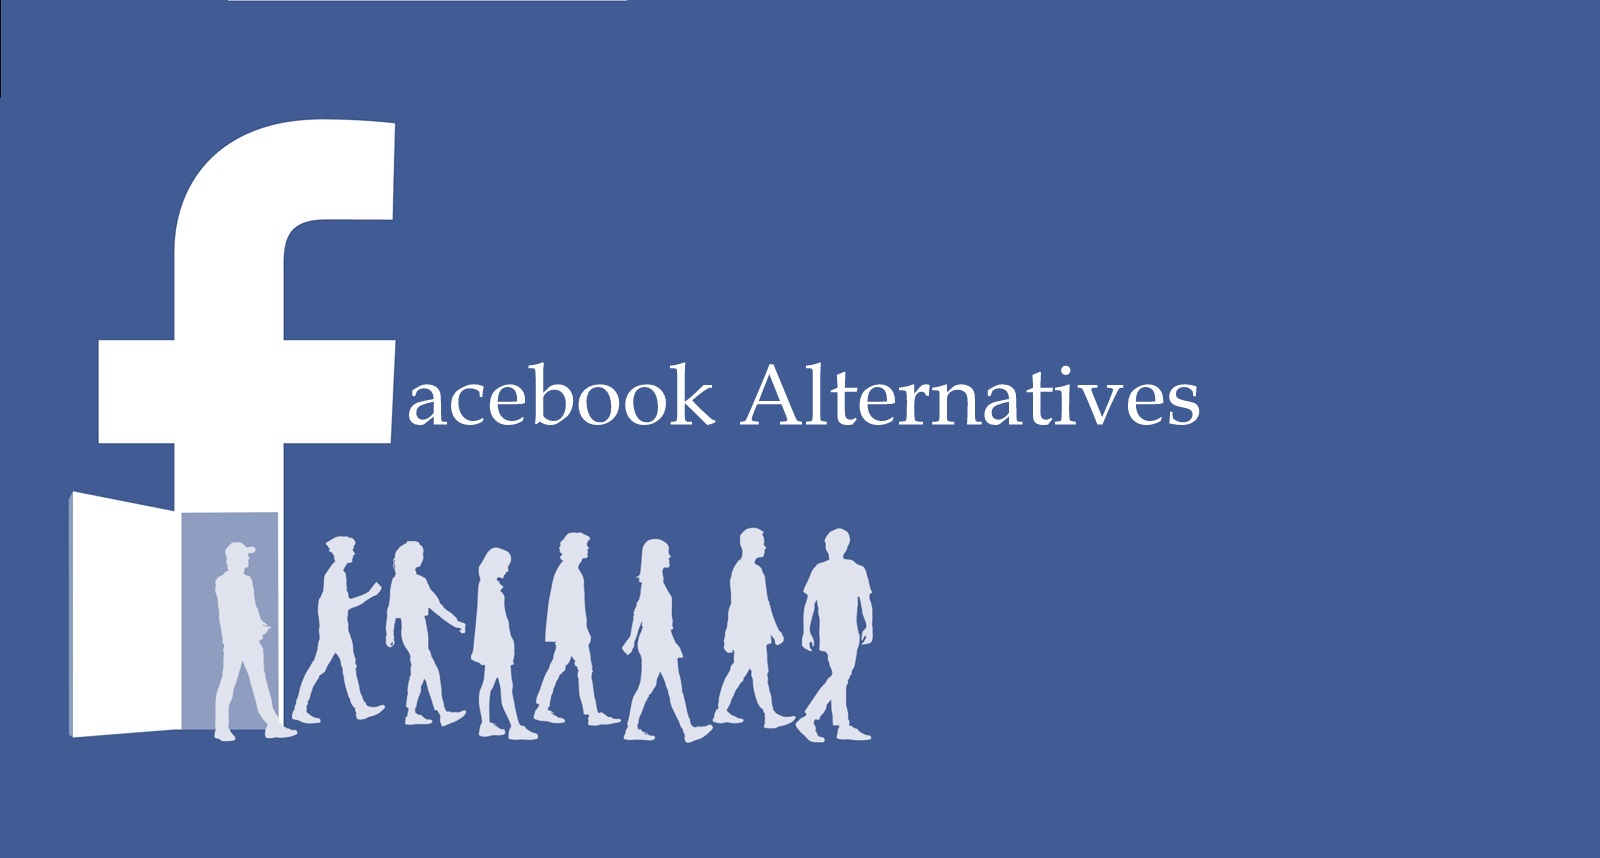 Onena Facebook Alternatibak & amp; Sormen Social Media 2020an
